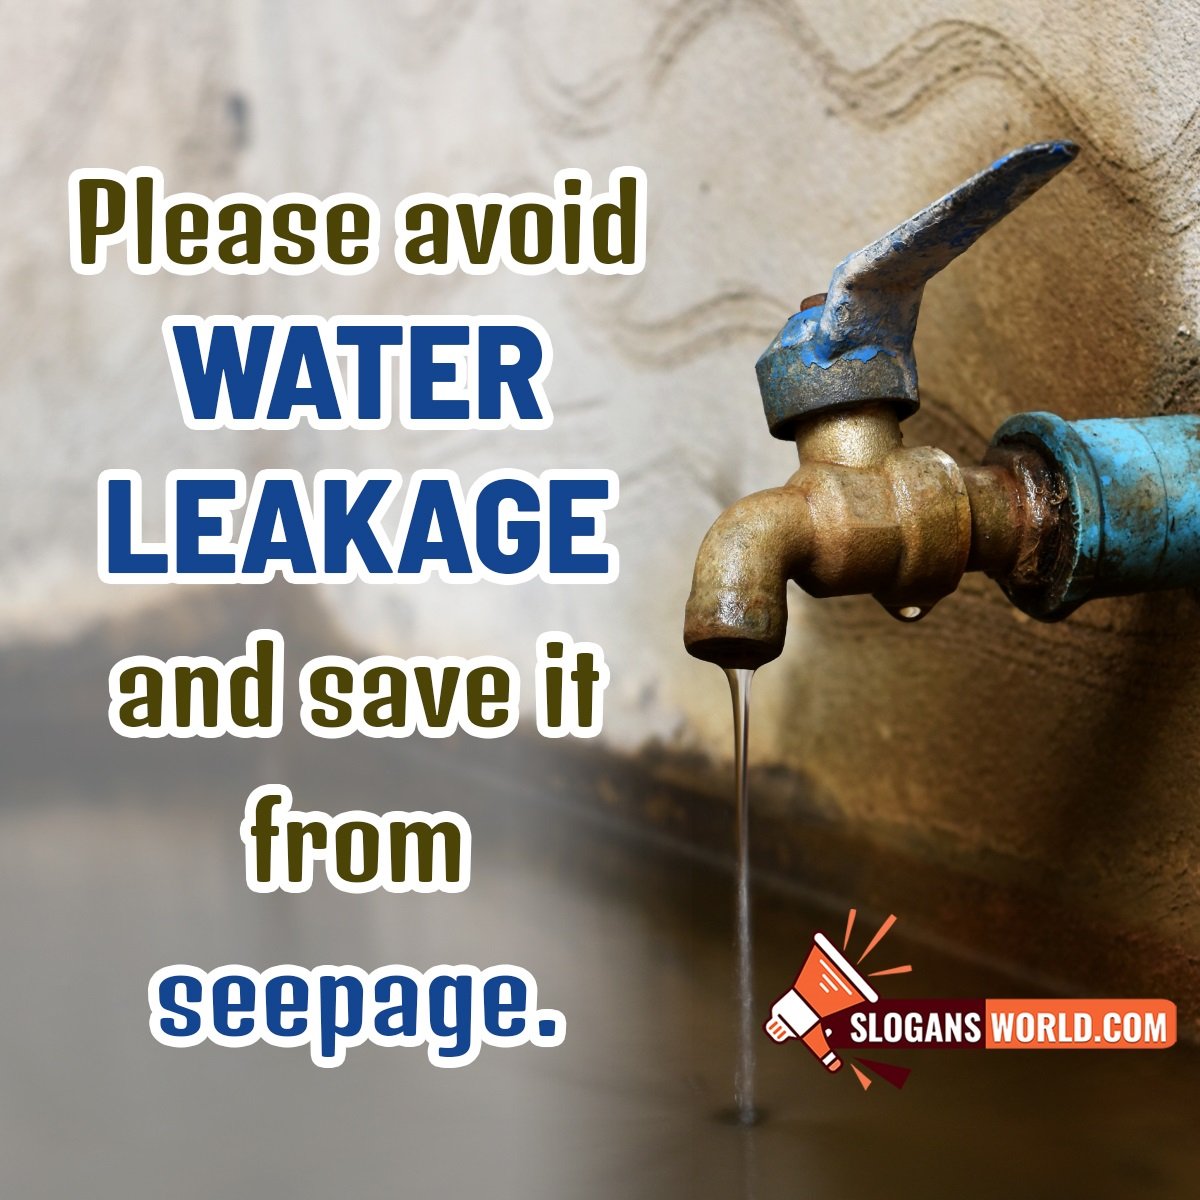 Slogan On Water Leakage